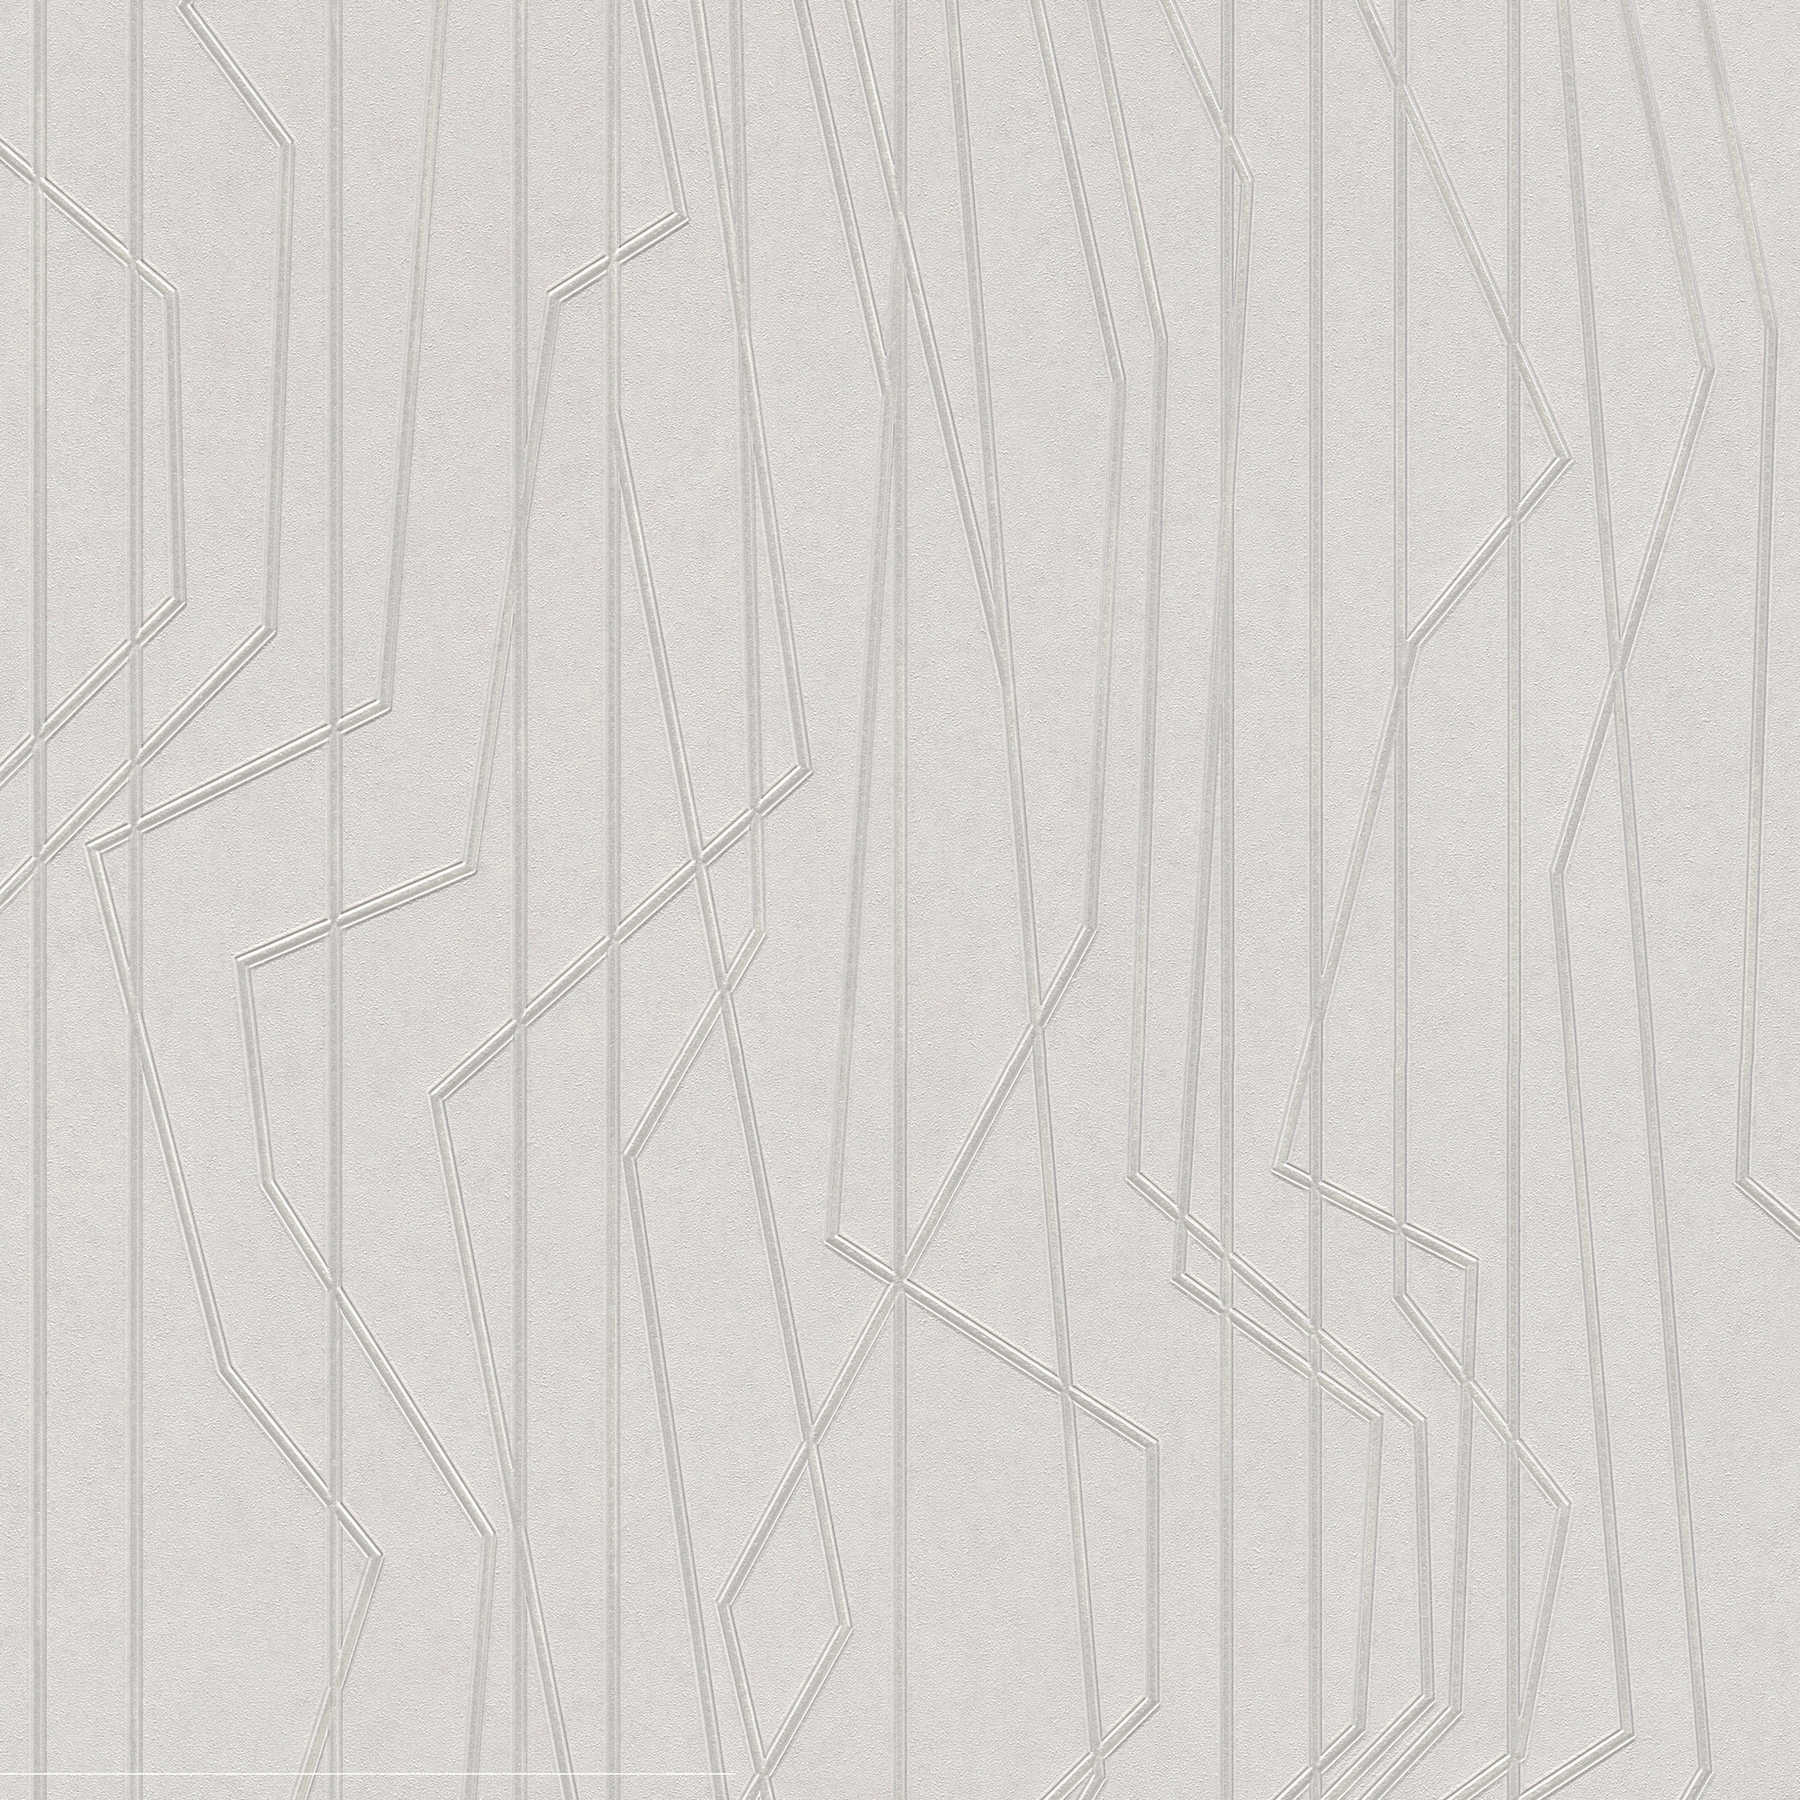         Wallpaper with geometric pattern & metallic effect - grey
    